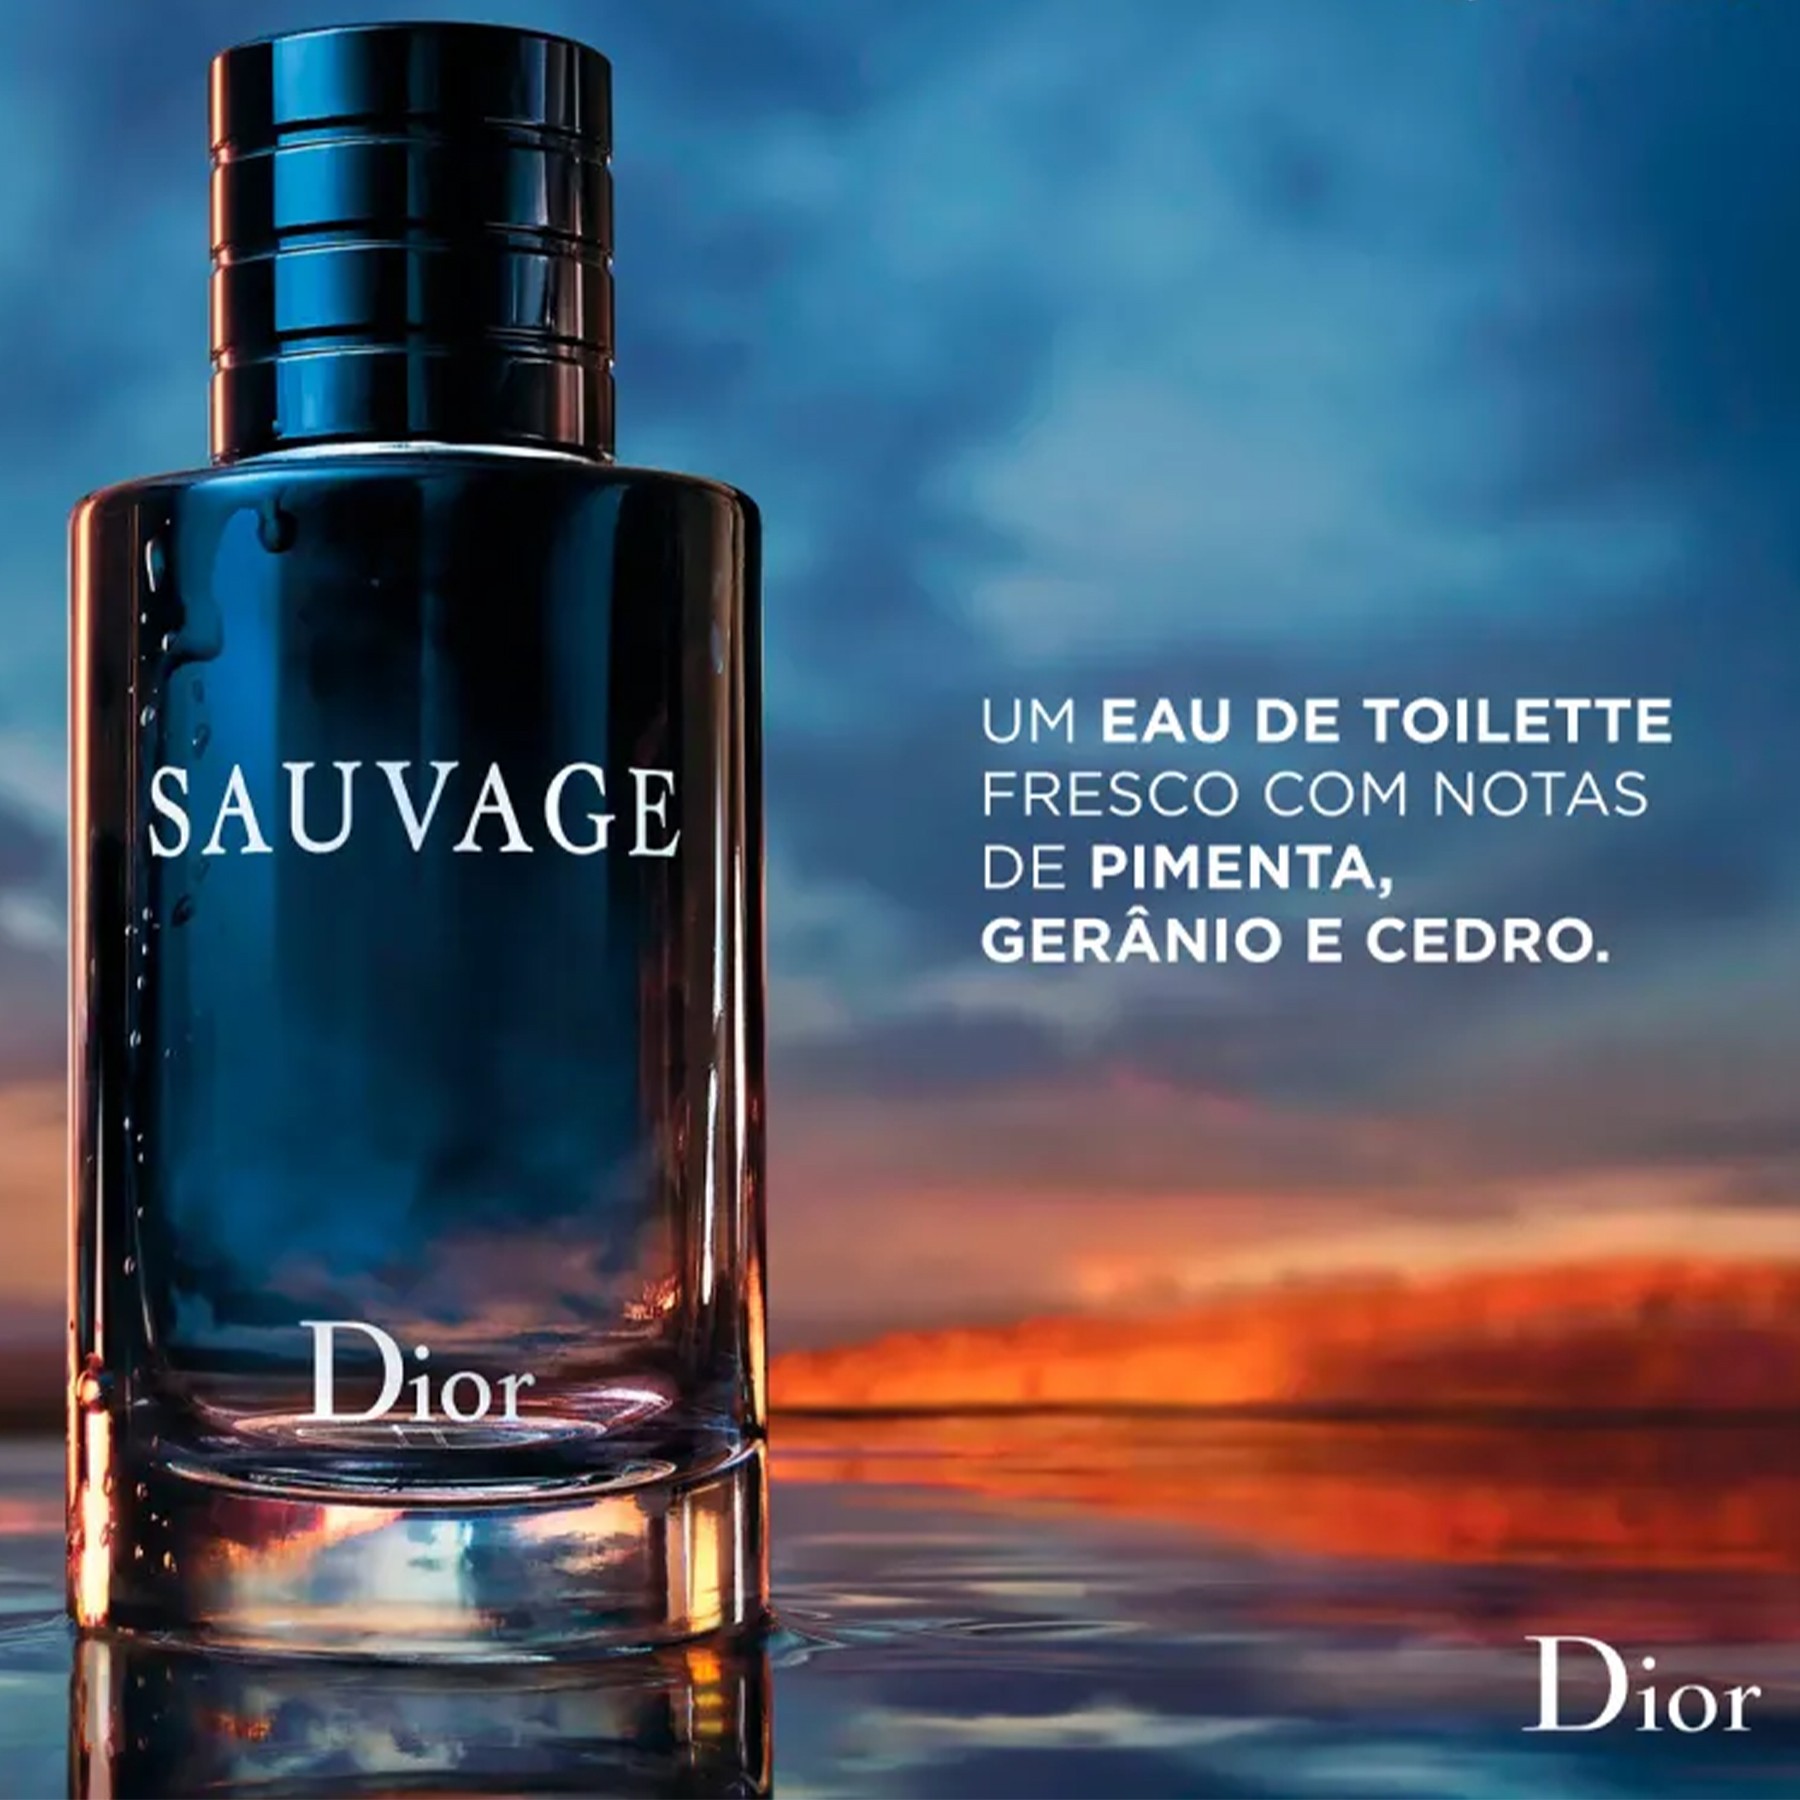 Sauvage Dior Perfume Masculino Eau de Toilette 100ml - DOLCE VITA